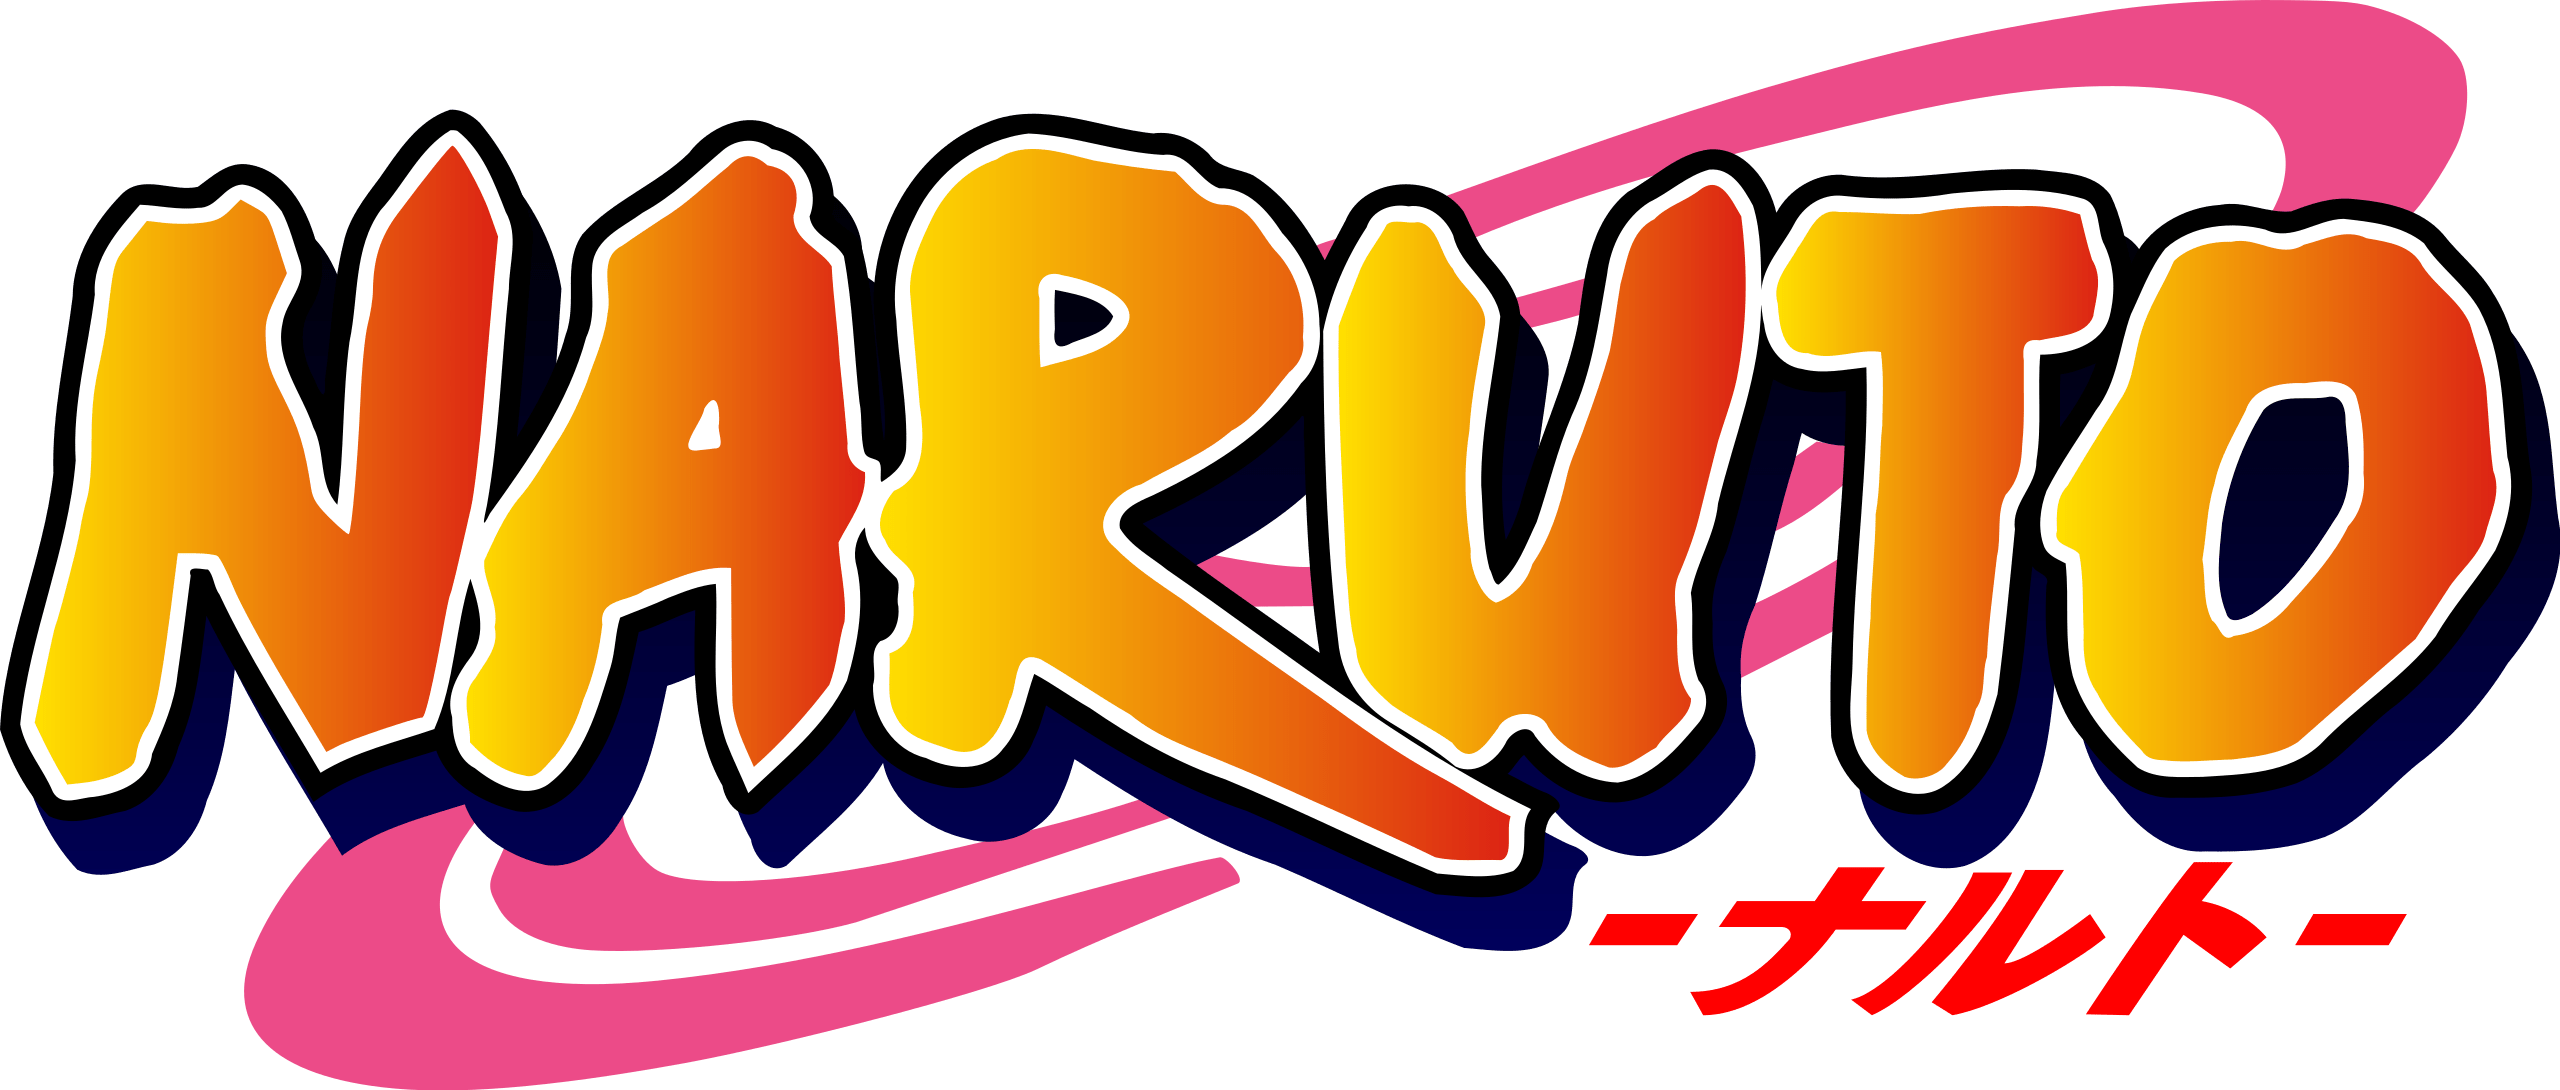 Naruto logo.svg